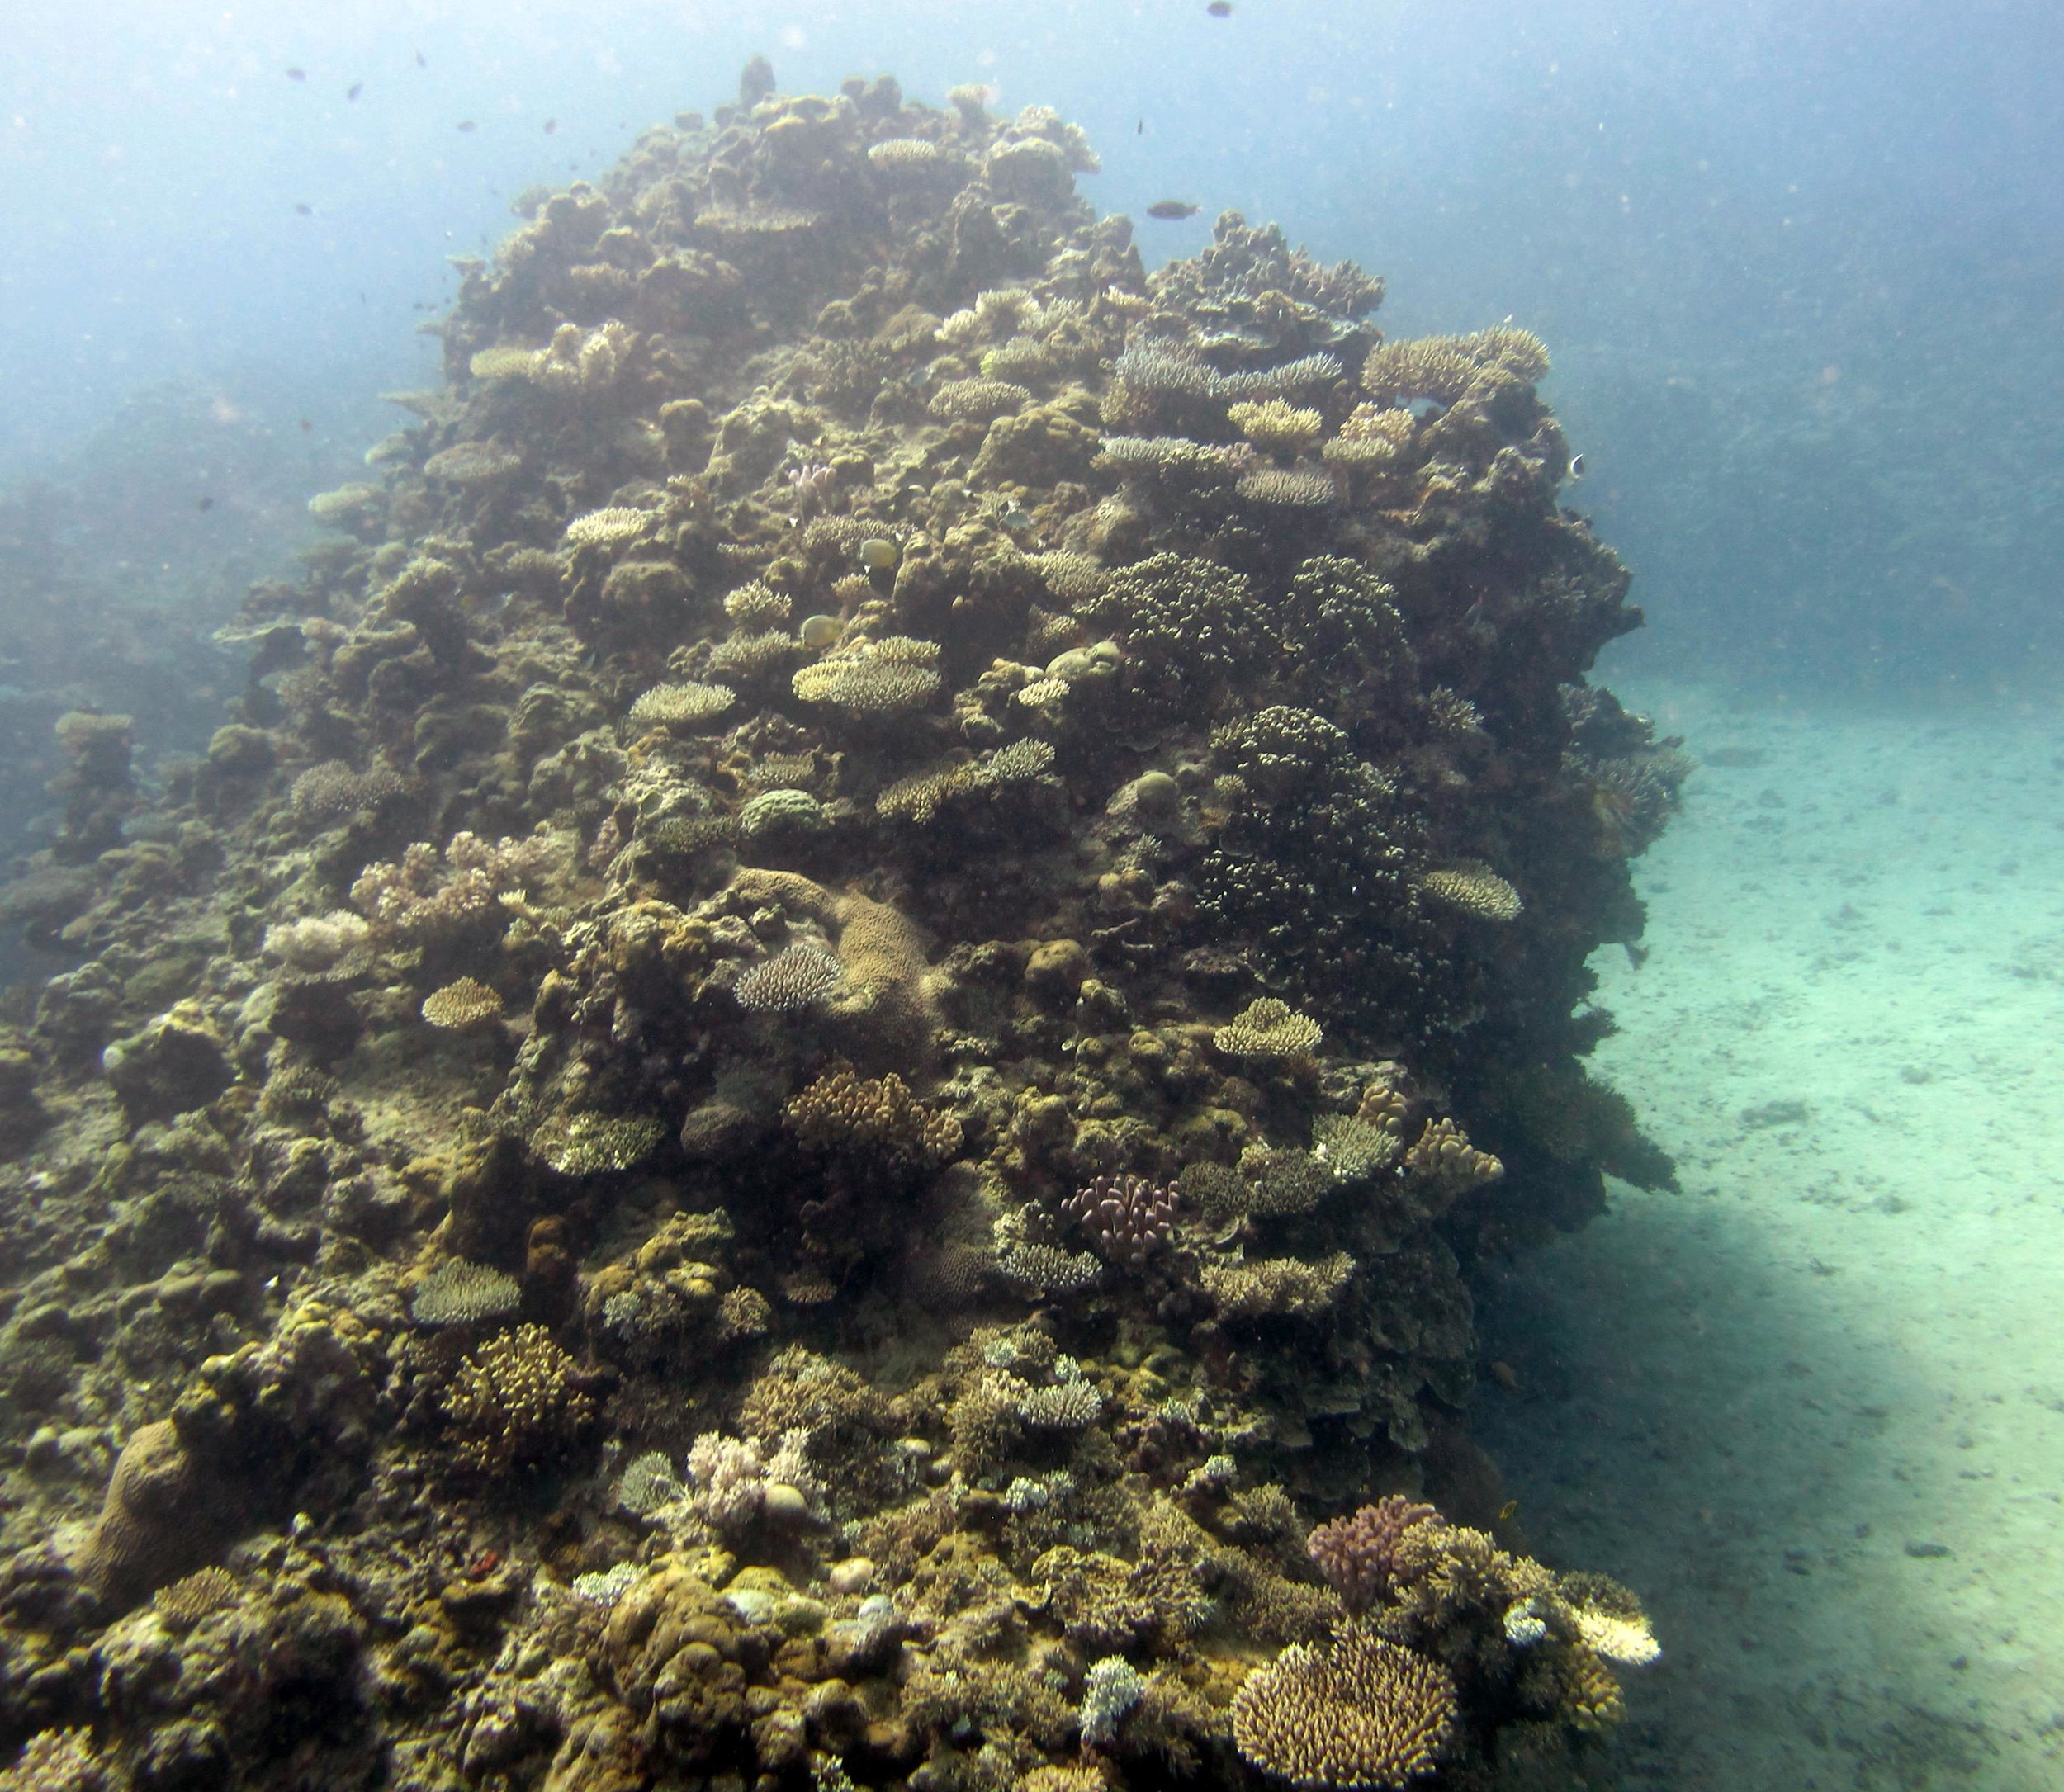 murky coral bommie.jpg